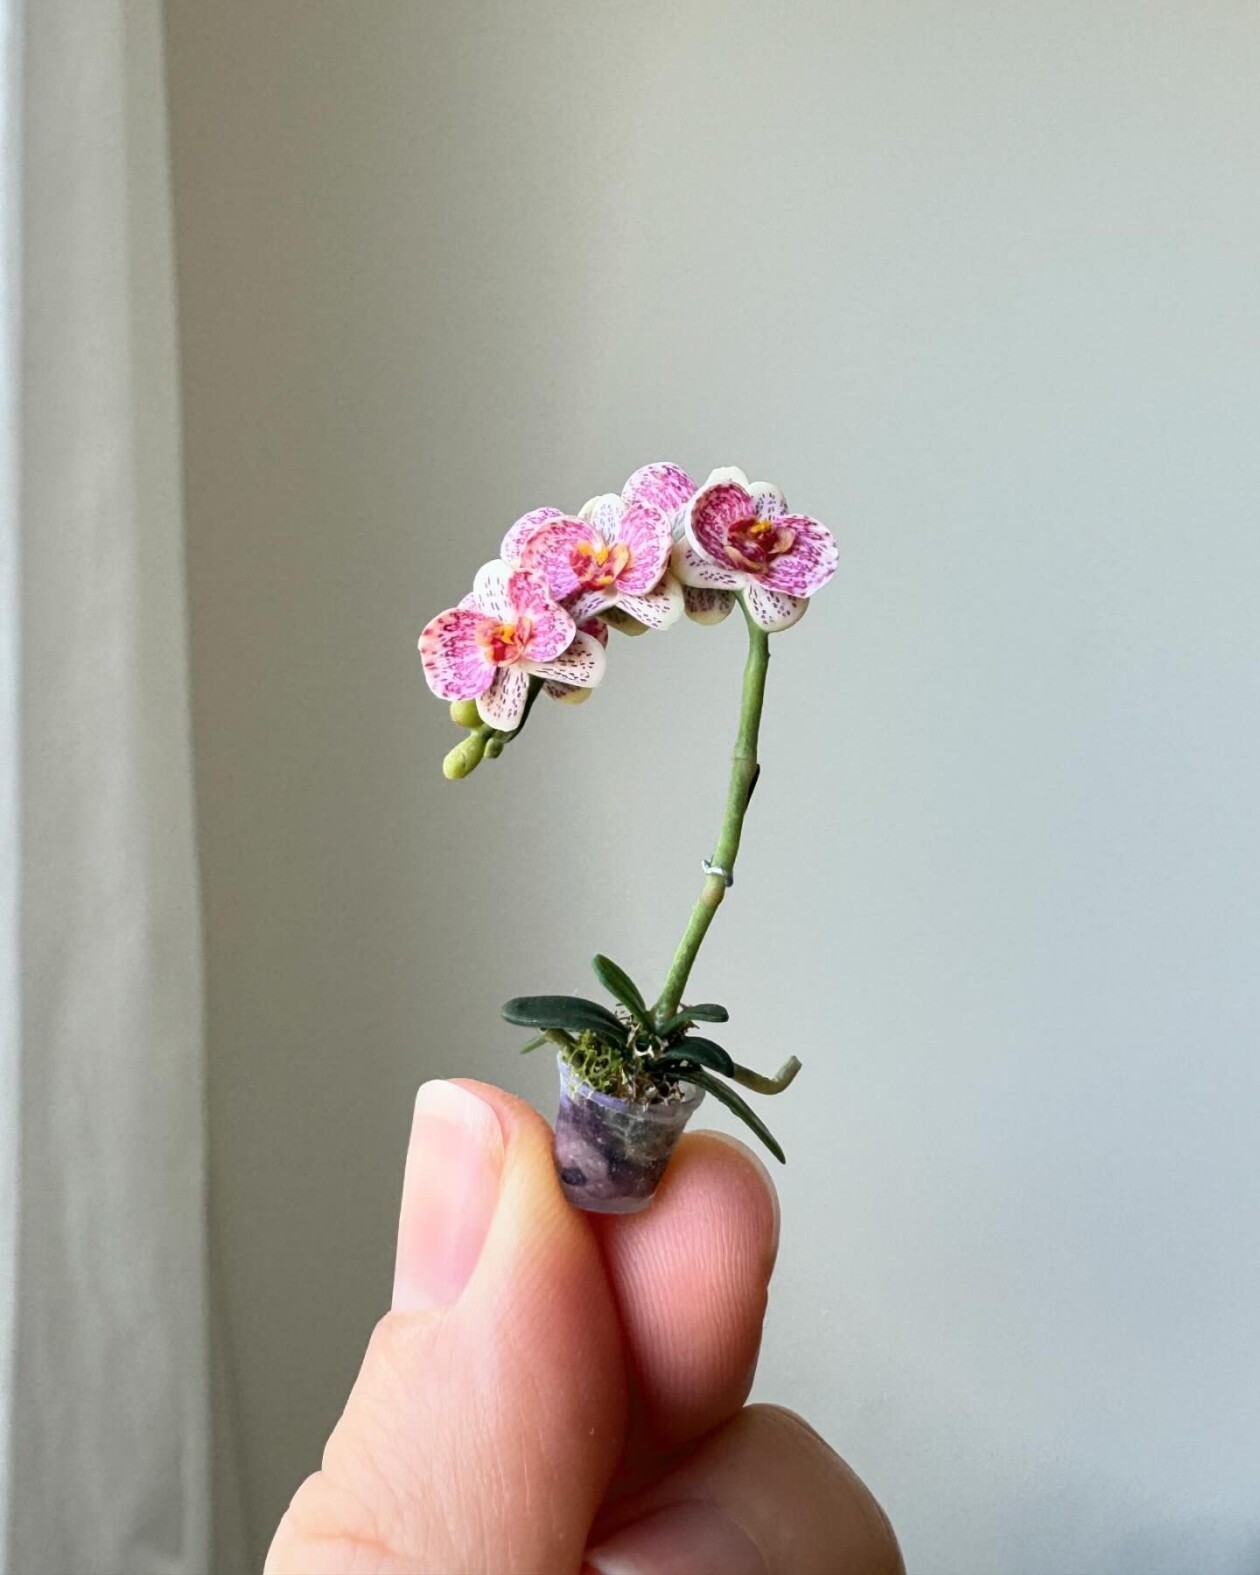 Handmade Miniature Polymer Clay Plants By Astrid Wilk (24)